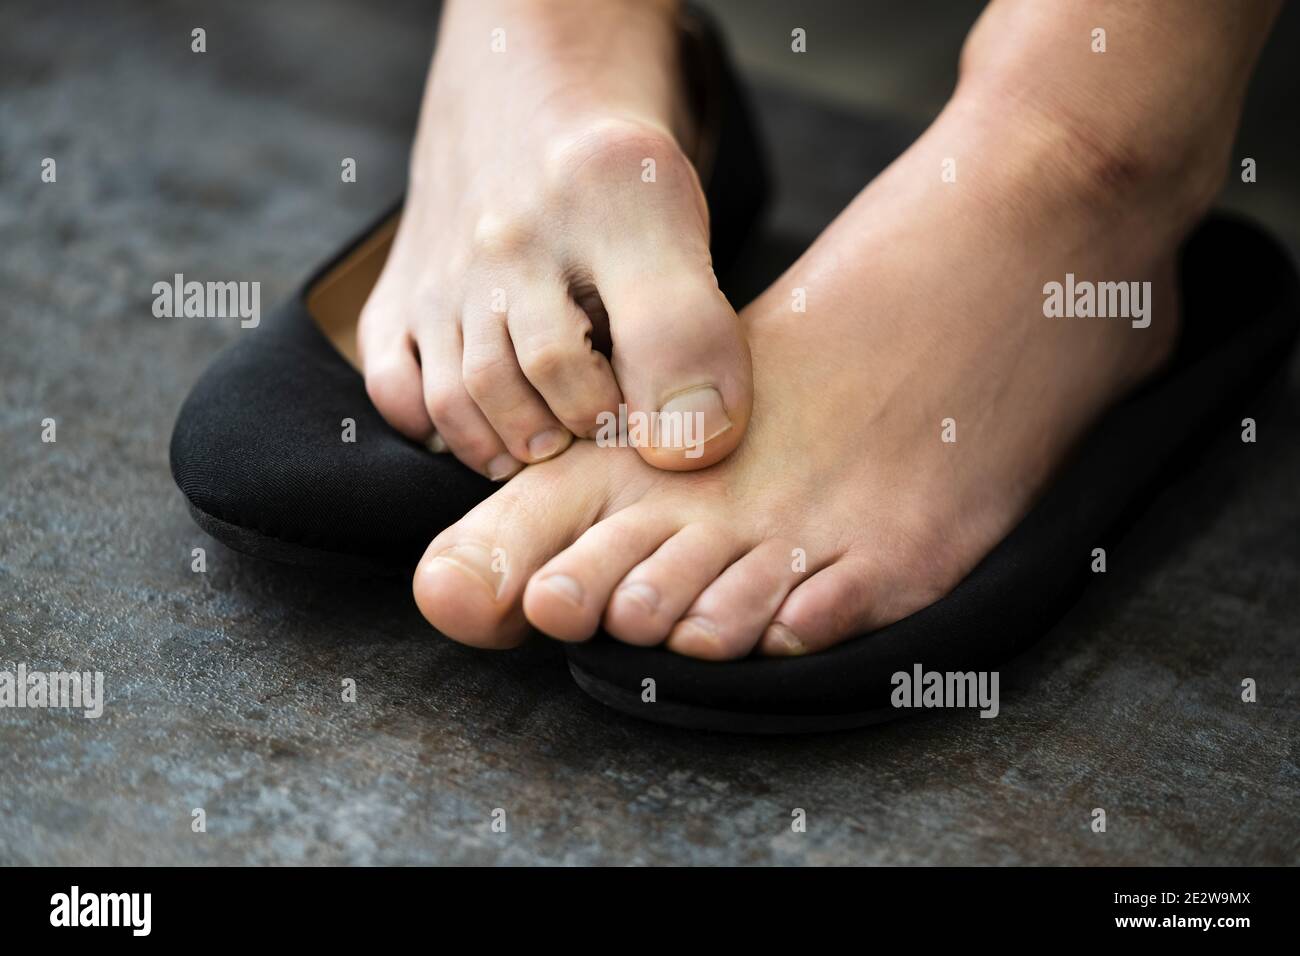 Femme pieds nus gros plan avec botte odorante Photo Stock - Alamy